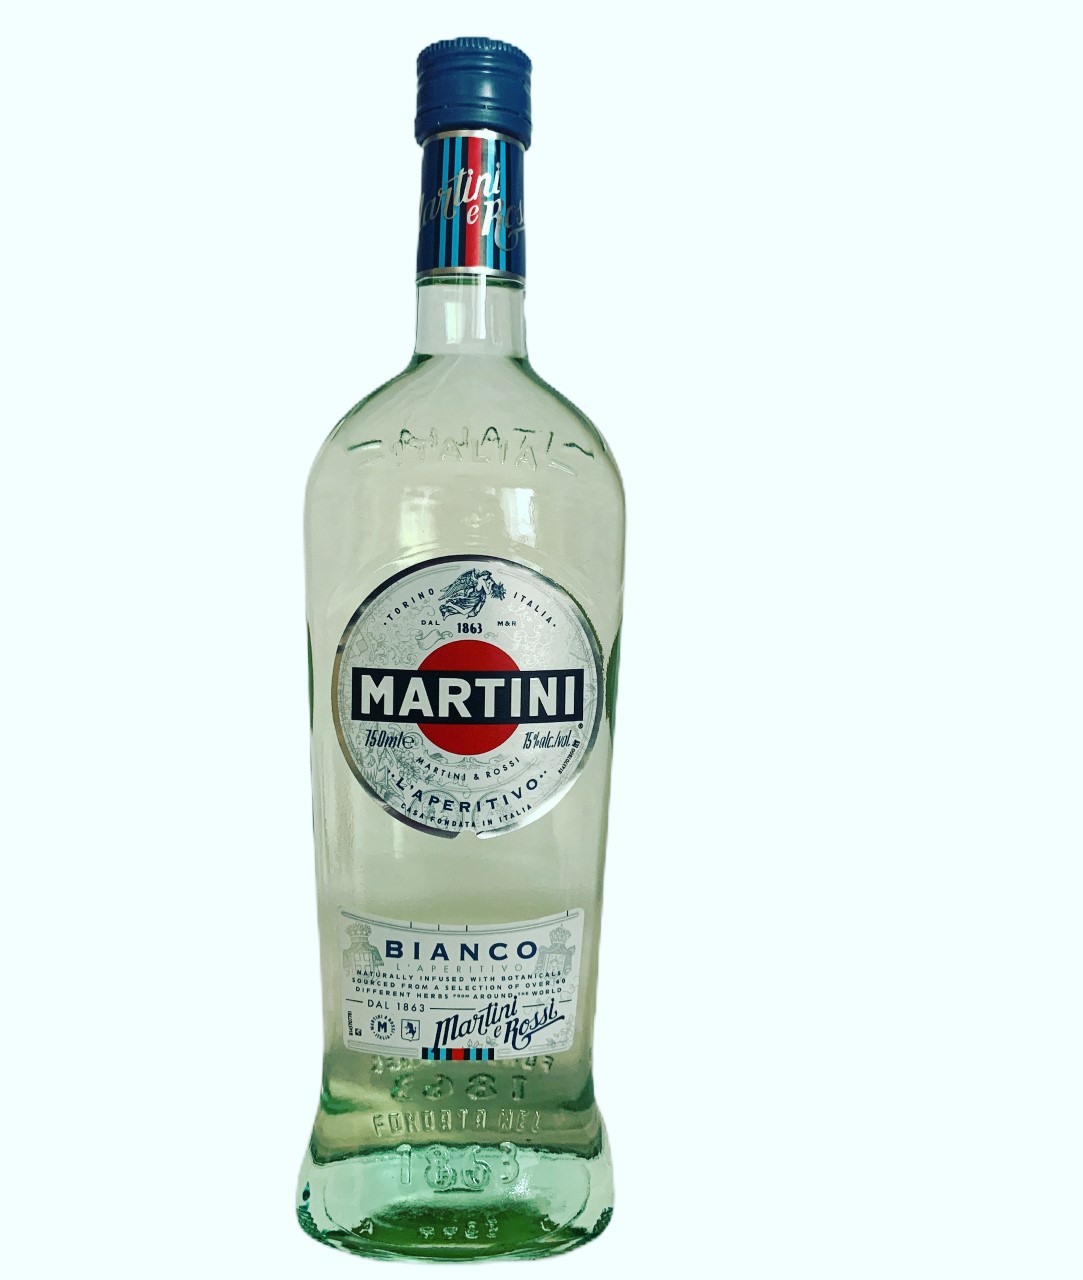 Martini Bianco 15% 75cl